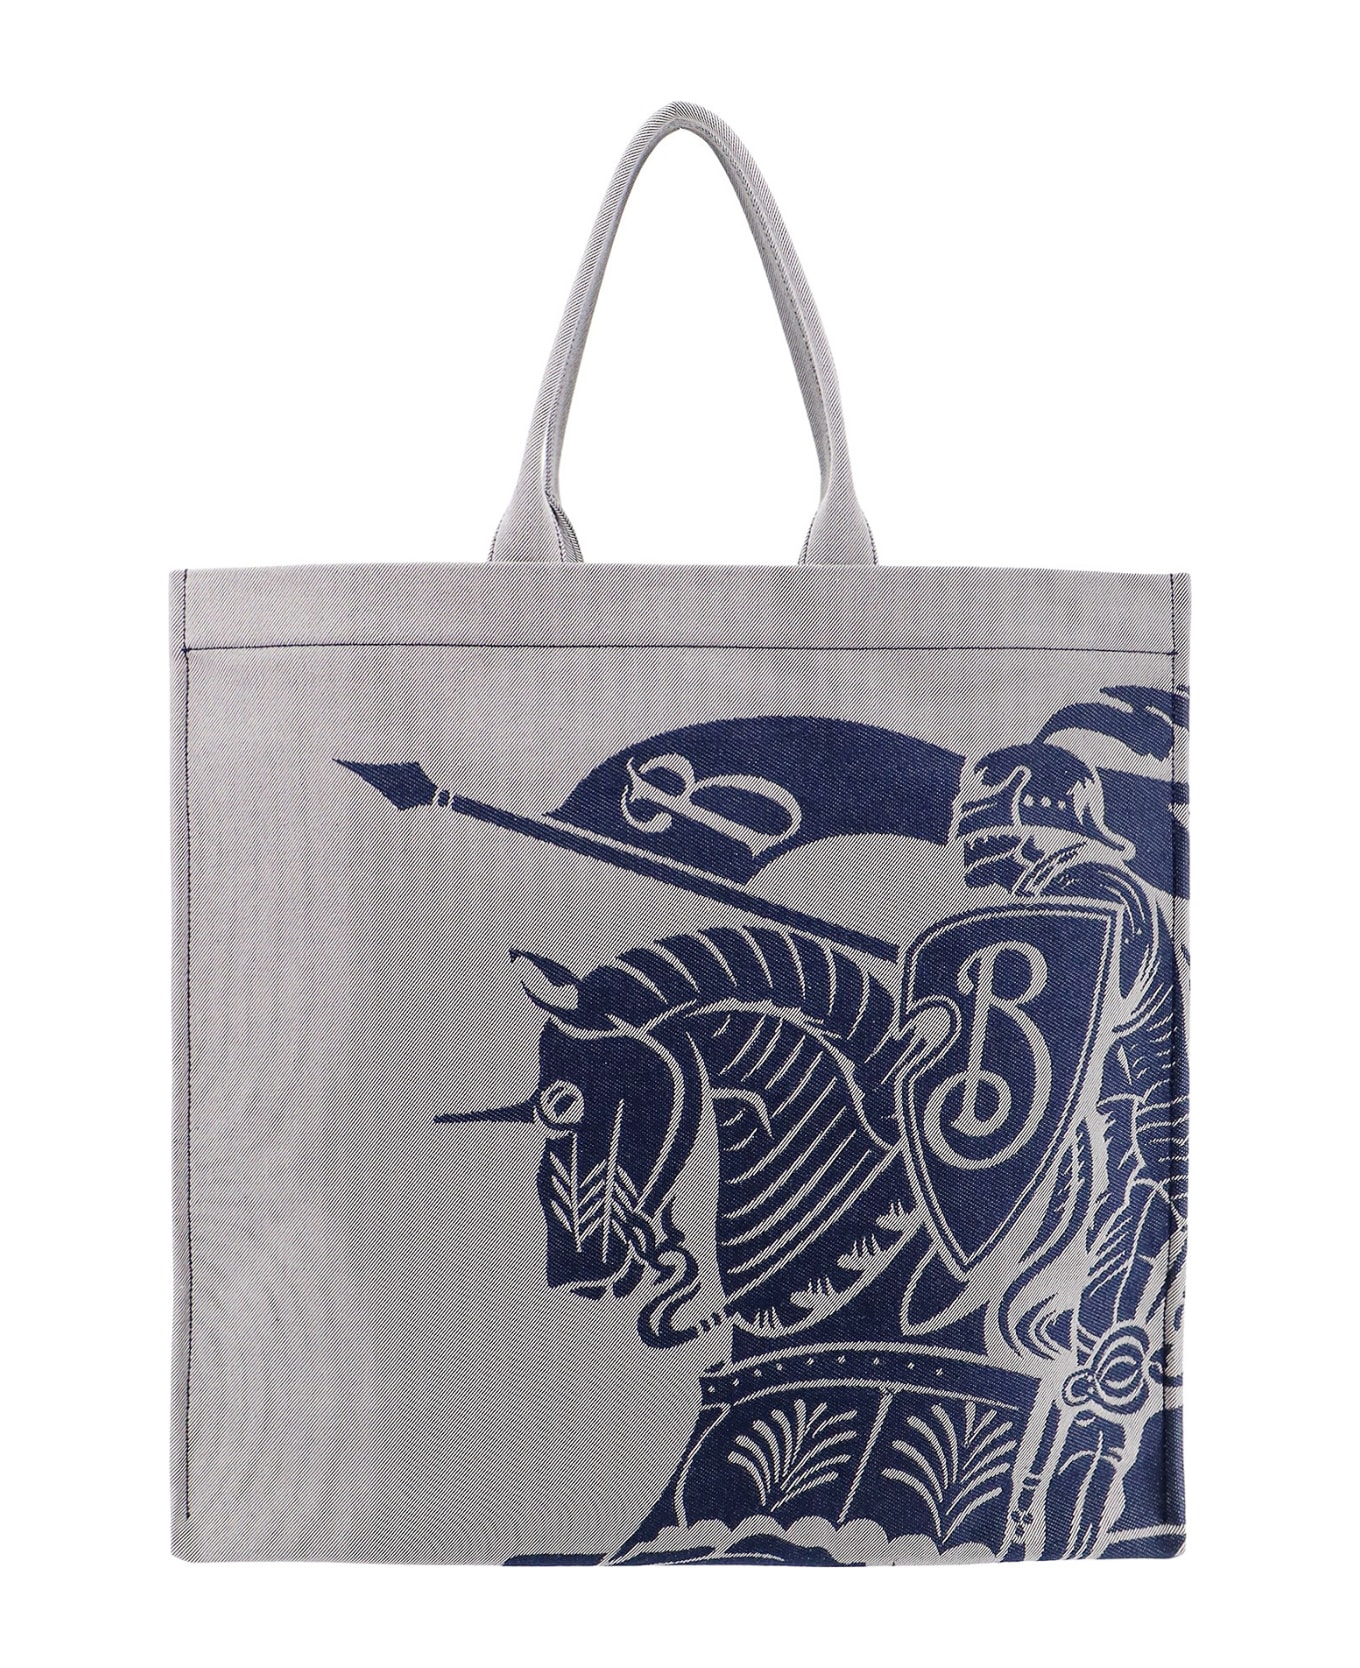 Burberry 'ekd' Xl Shopping Bag - Blue